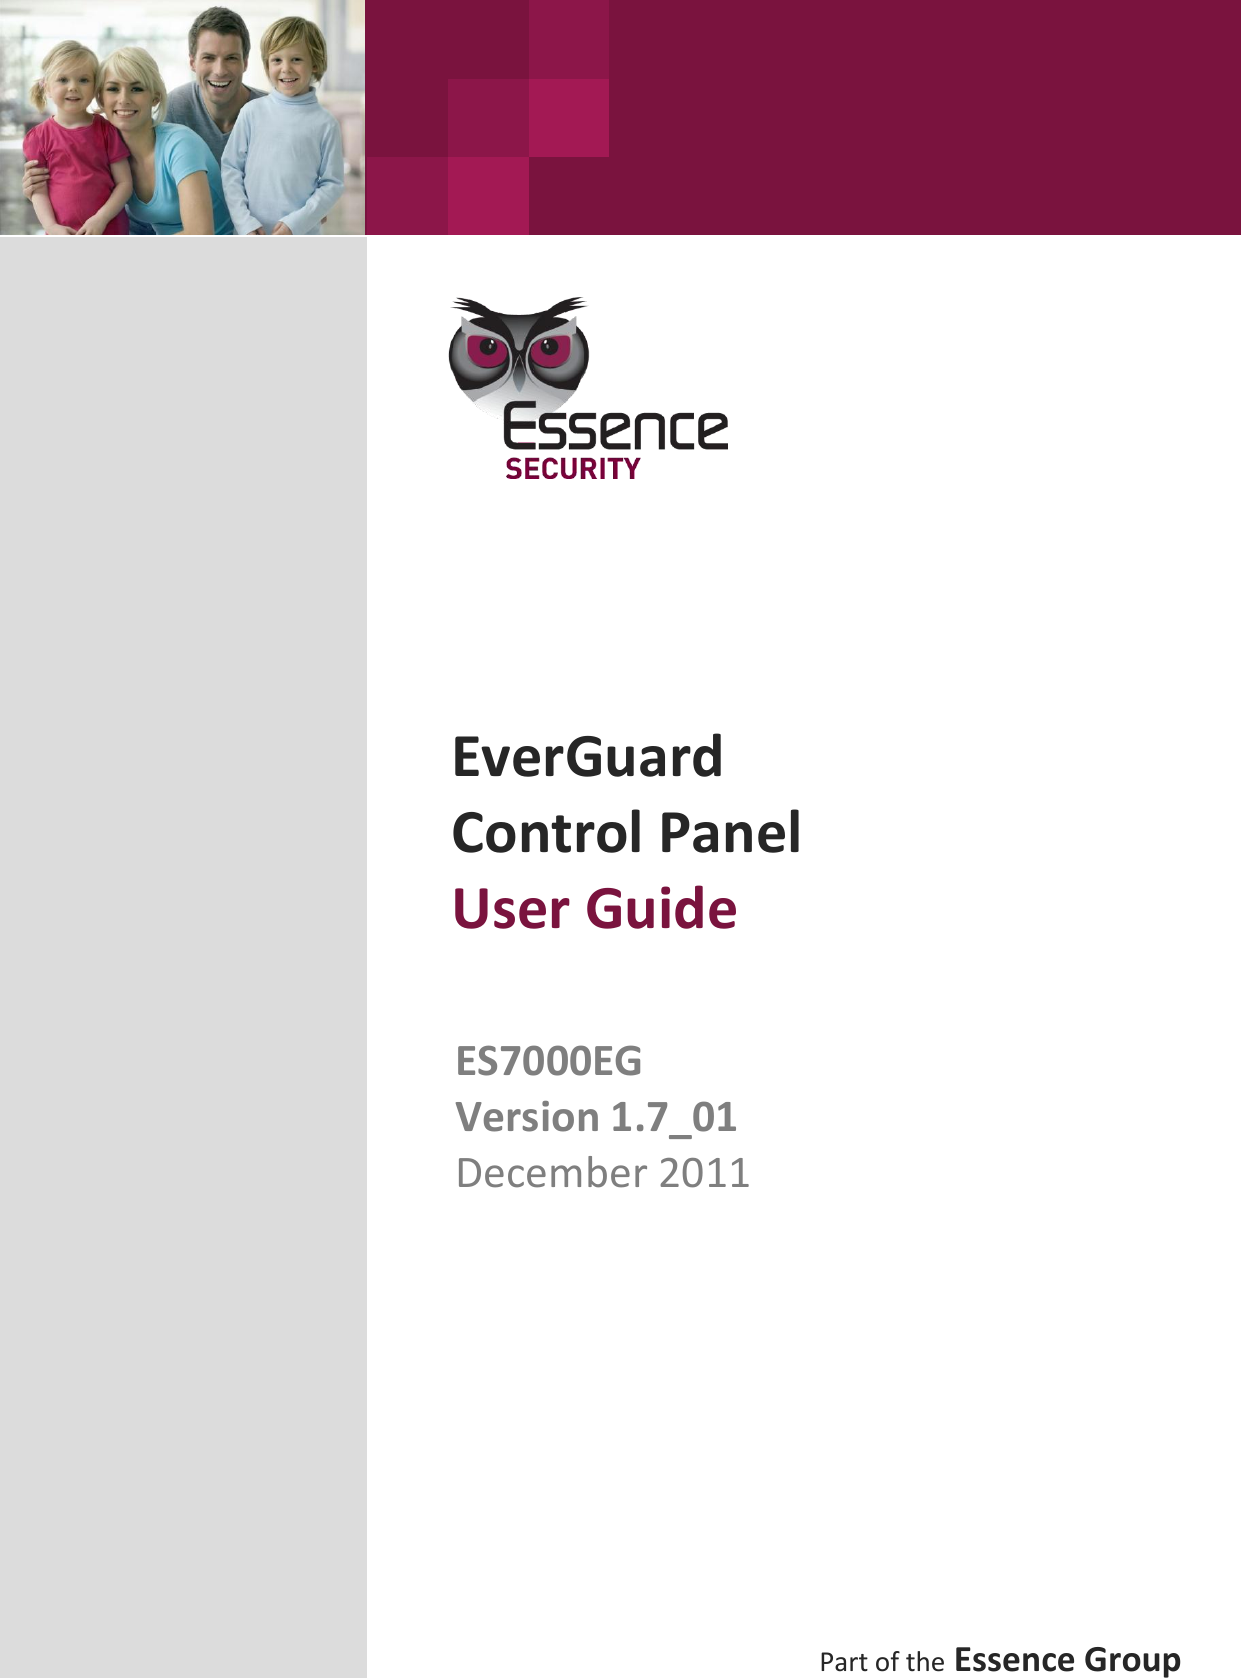   Part of the Essence Group       ES7000EG Version 1.7_01 December 2011 EverGuard Control Panel User Guide 